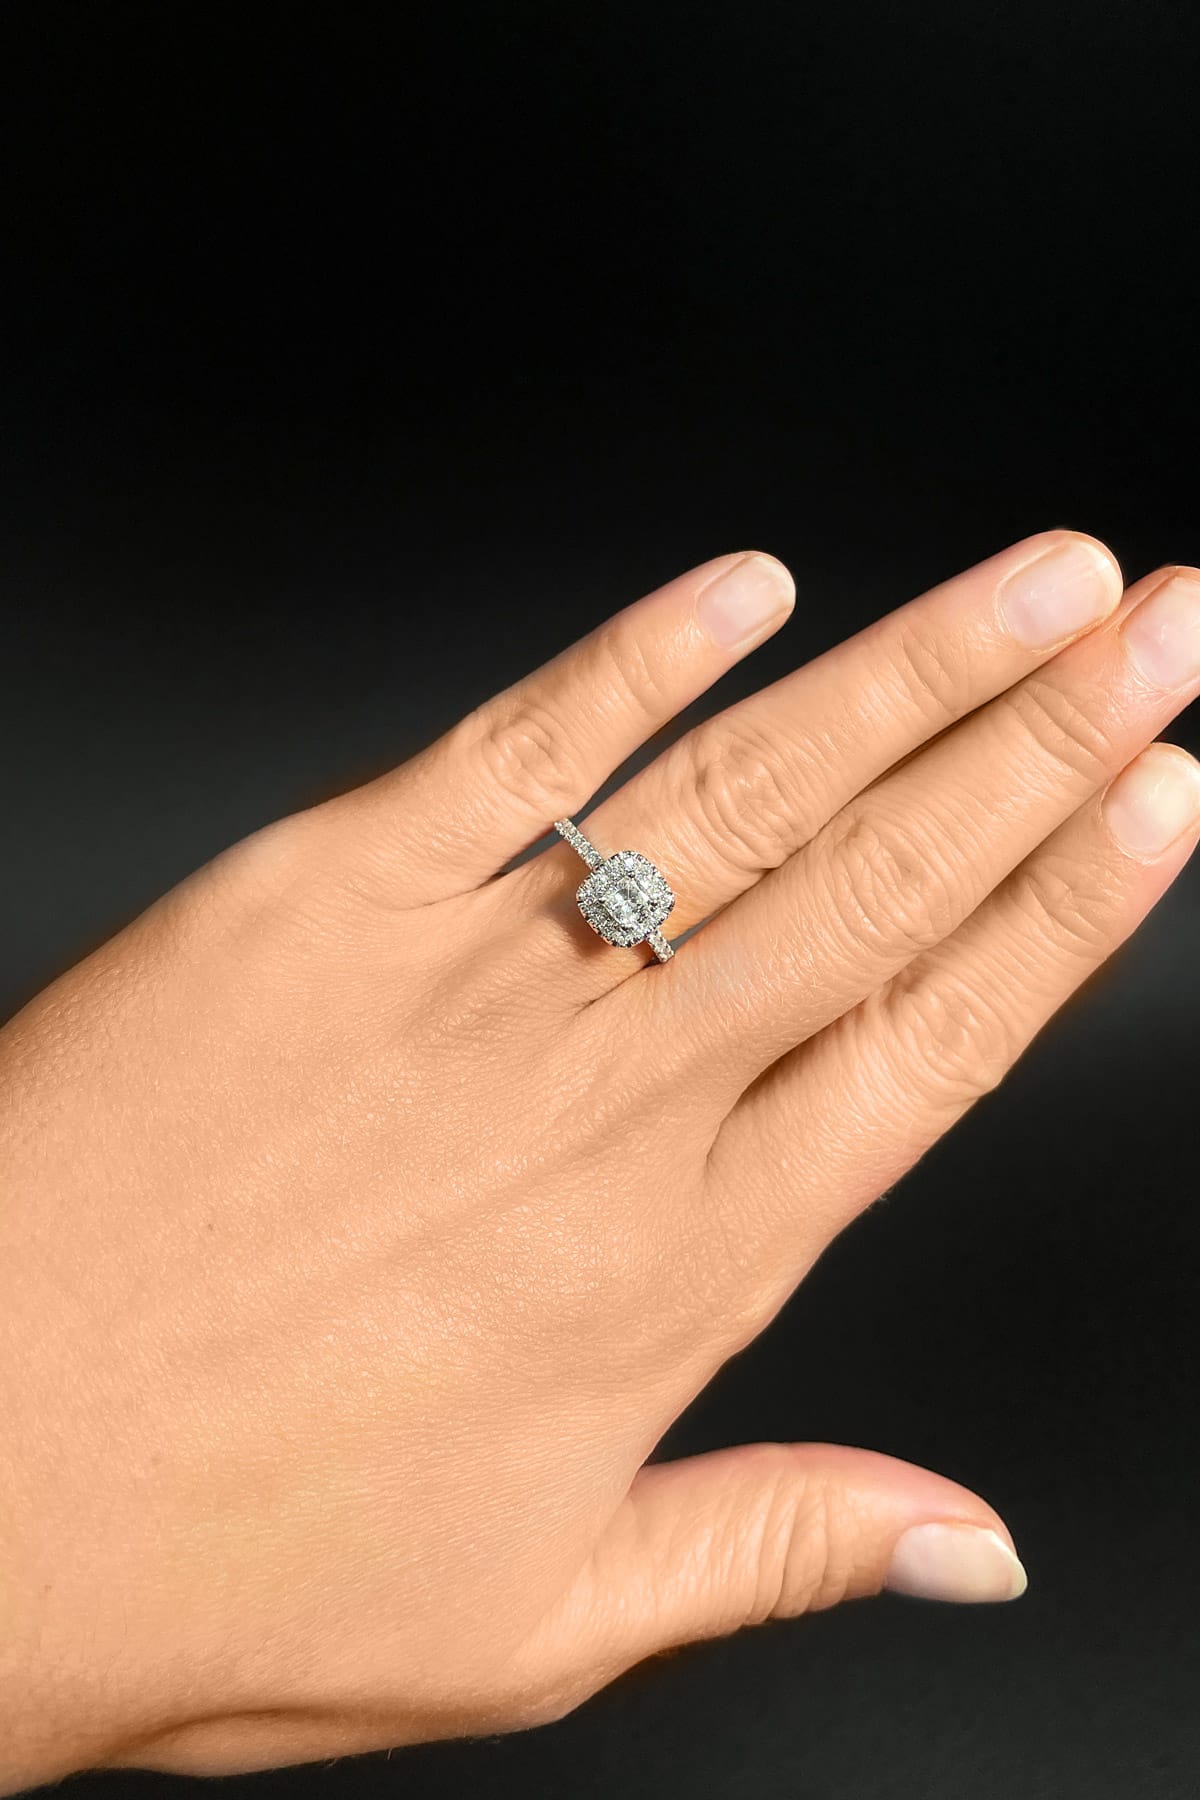 18 carat white gold 0.50ct cushion cut diamond halo ring available at LeGassick Diamonds and Jewellery Gold Coast, Australia